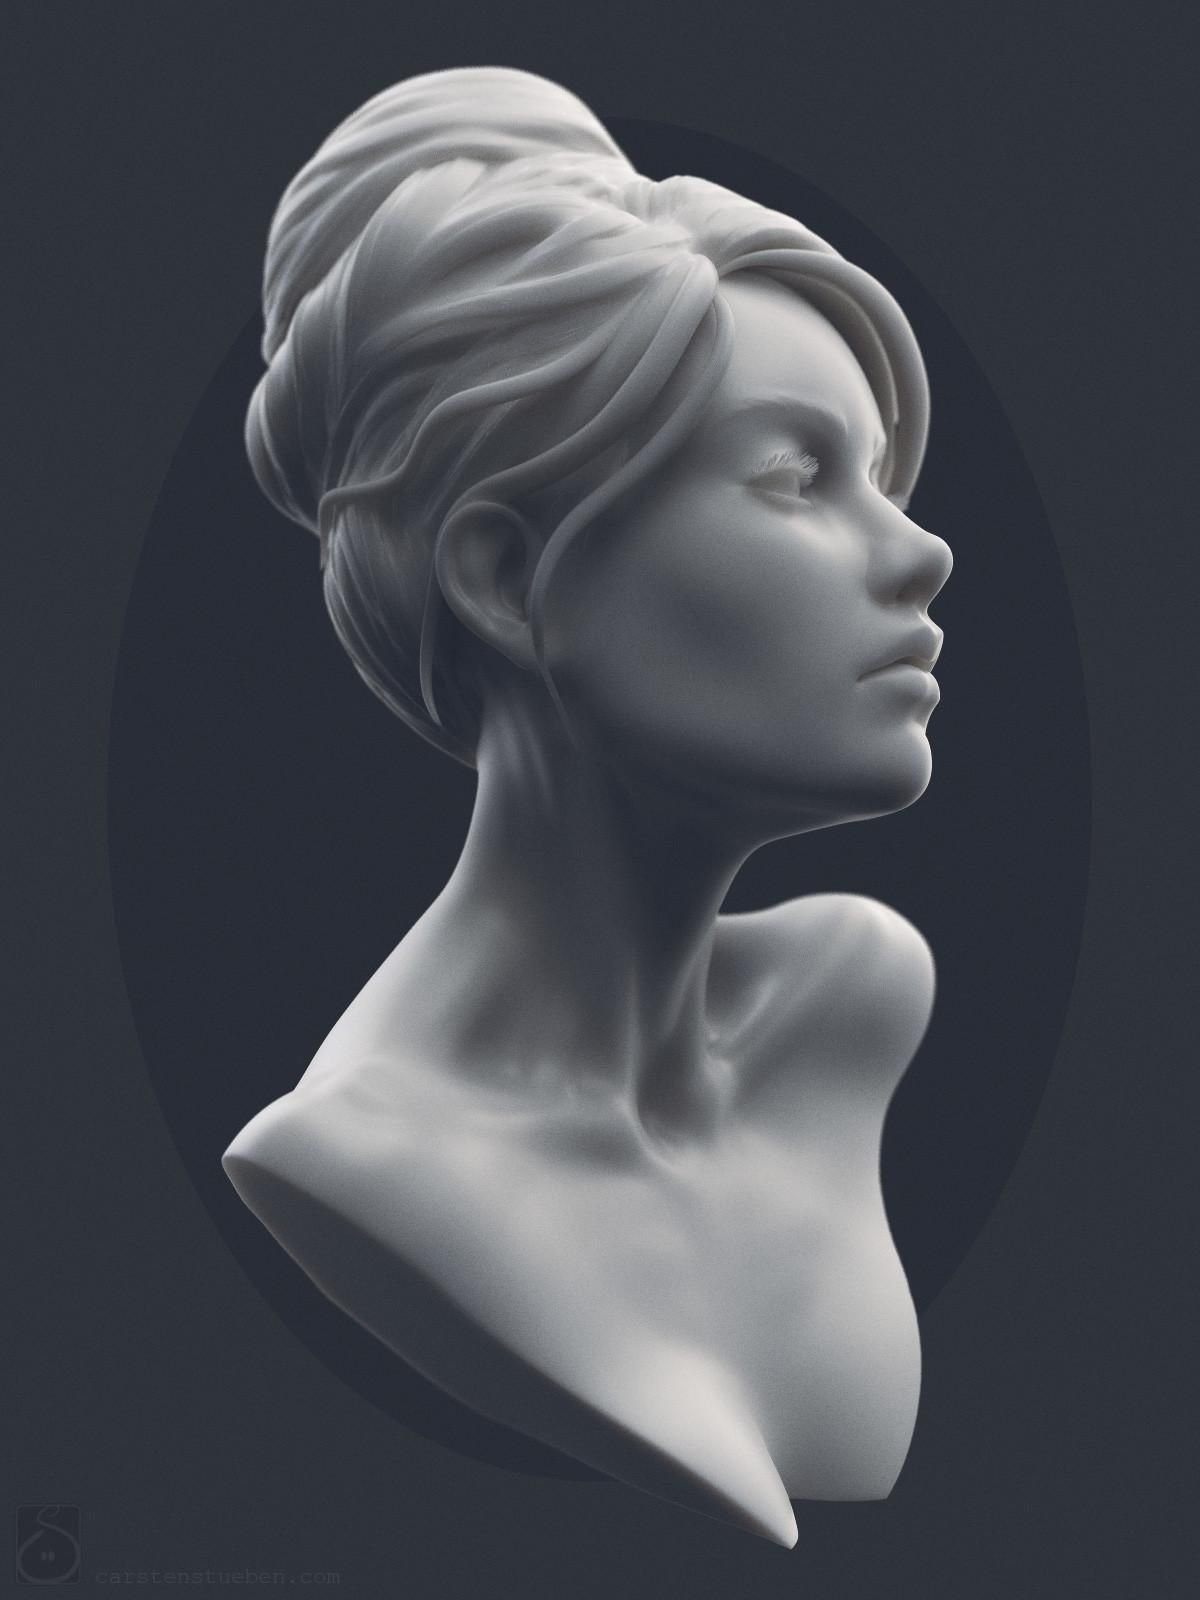 Female silhouette rendition image